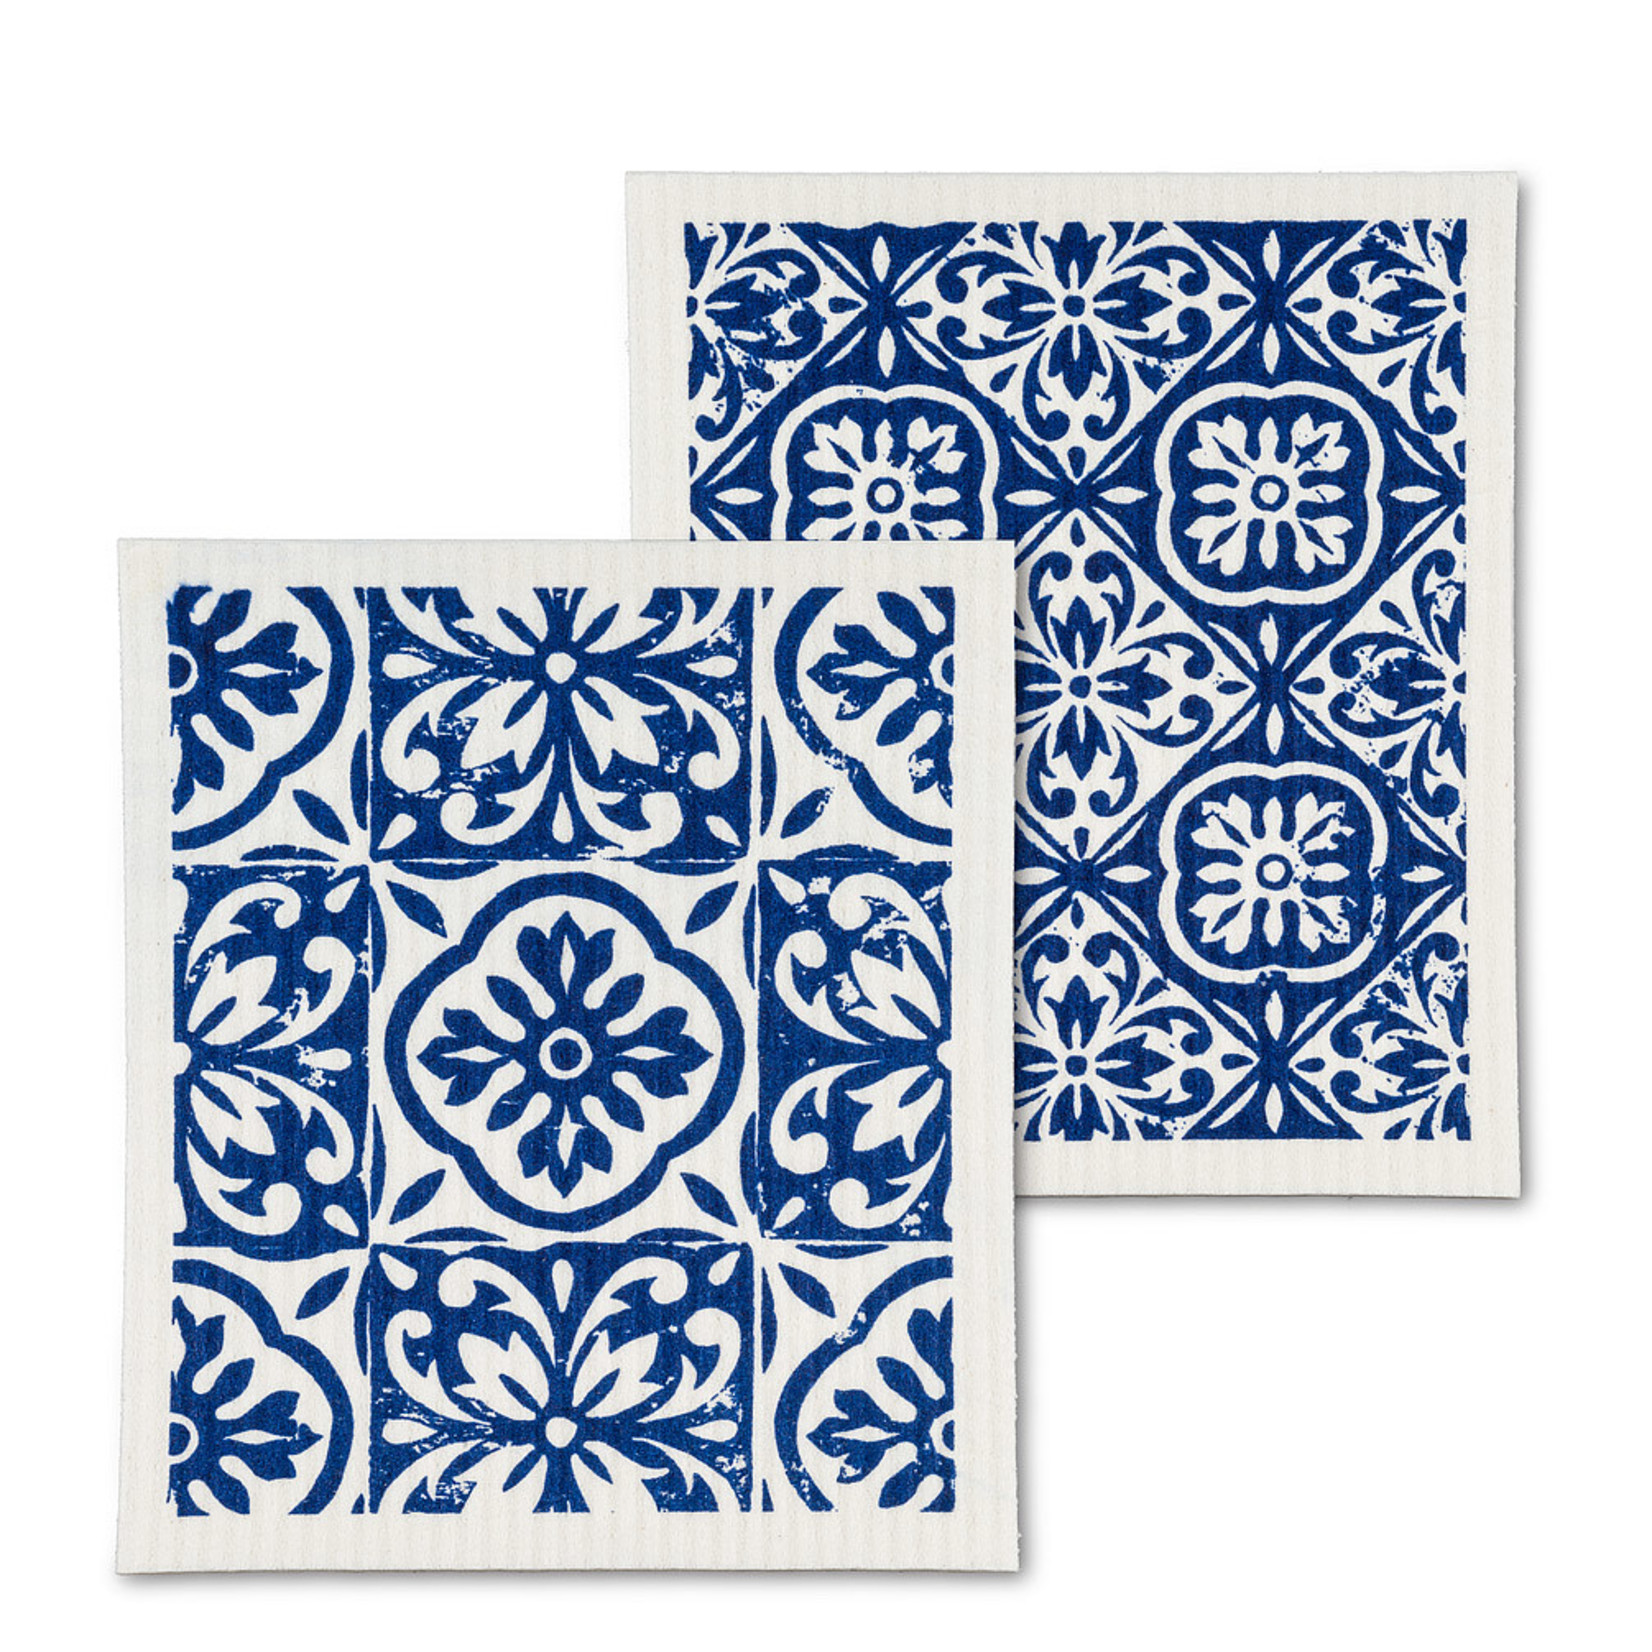 ABBOTT ABBOTT Blue Tile Swedish Dish Cloths S/2